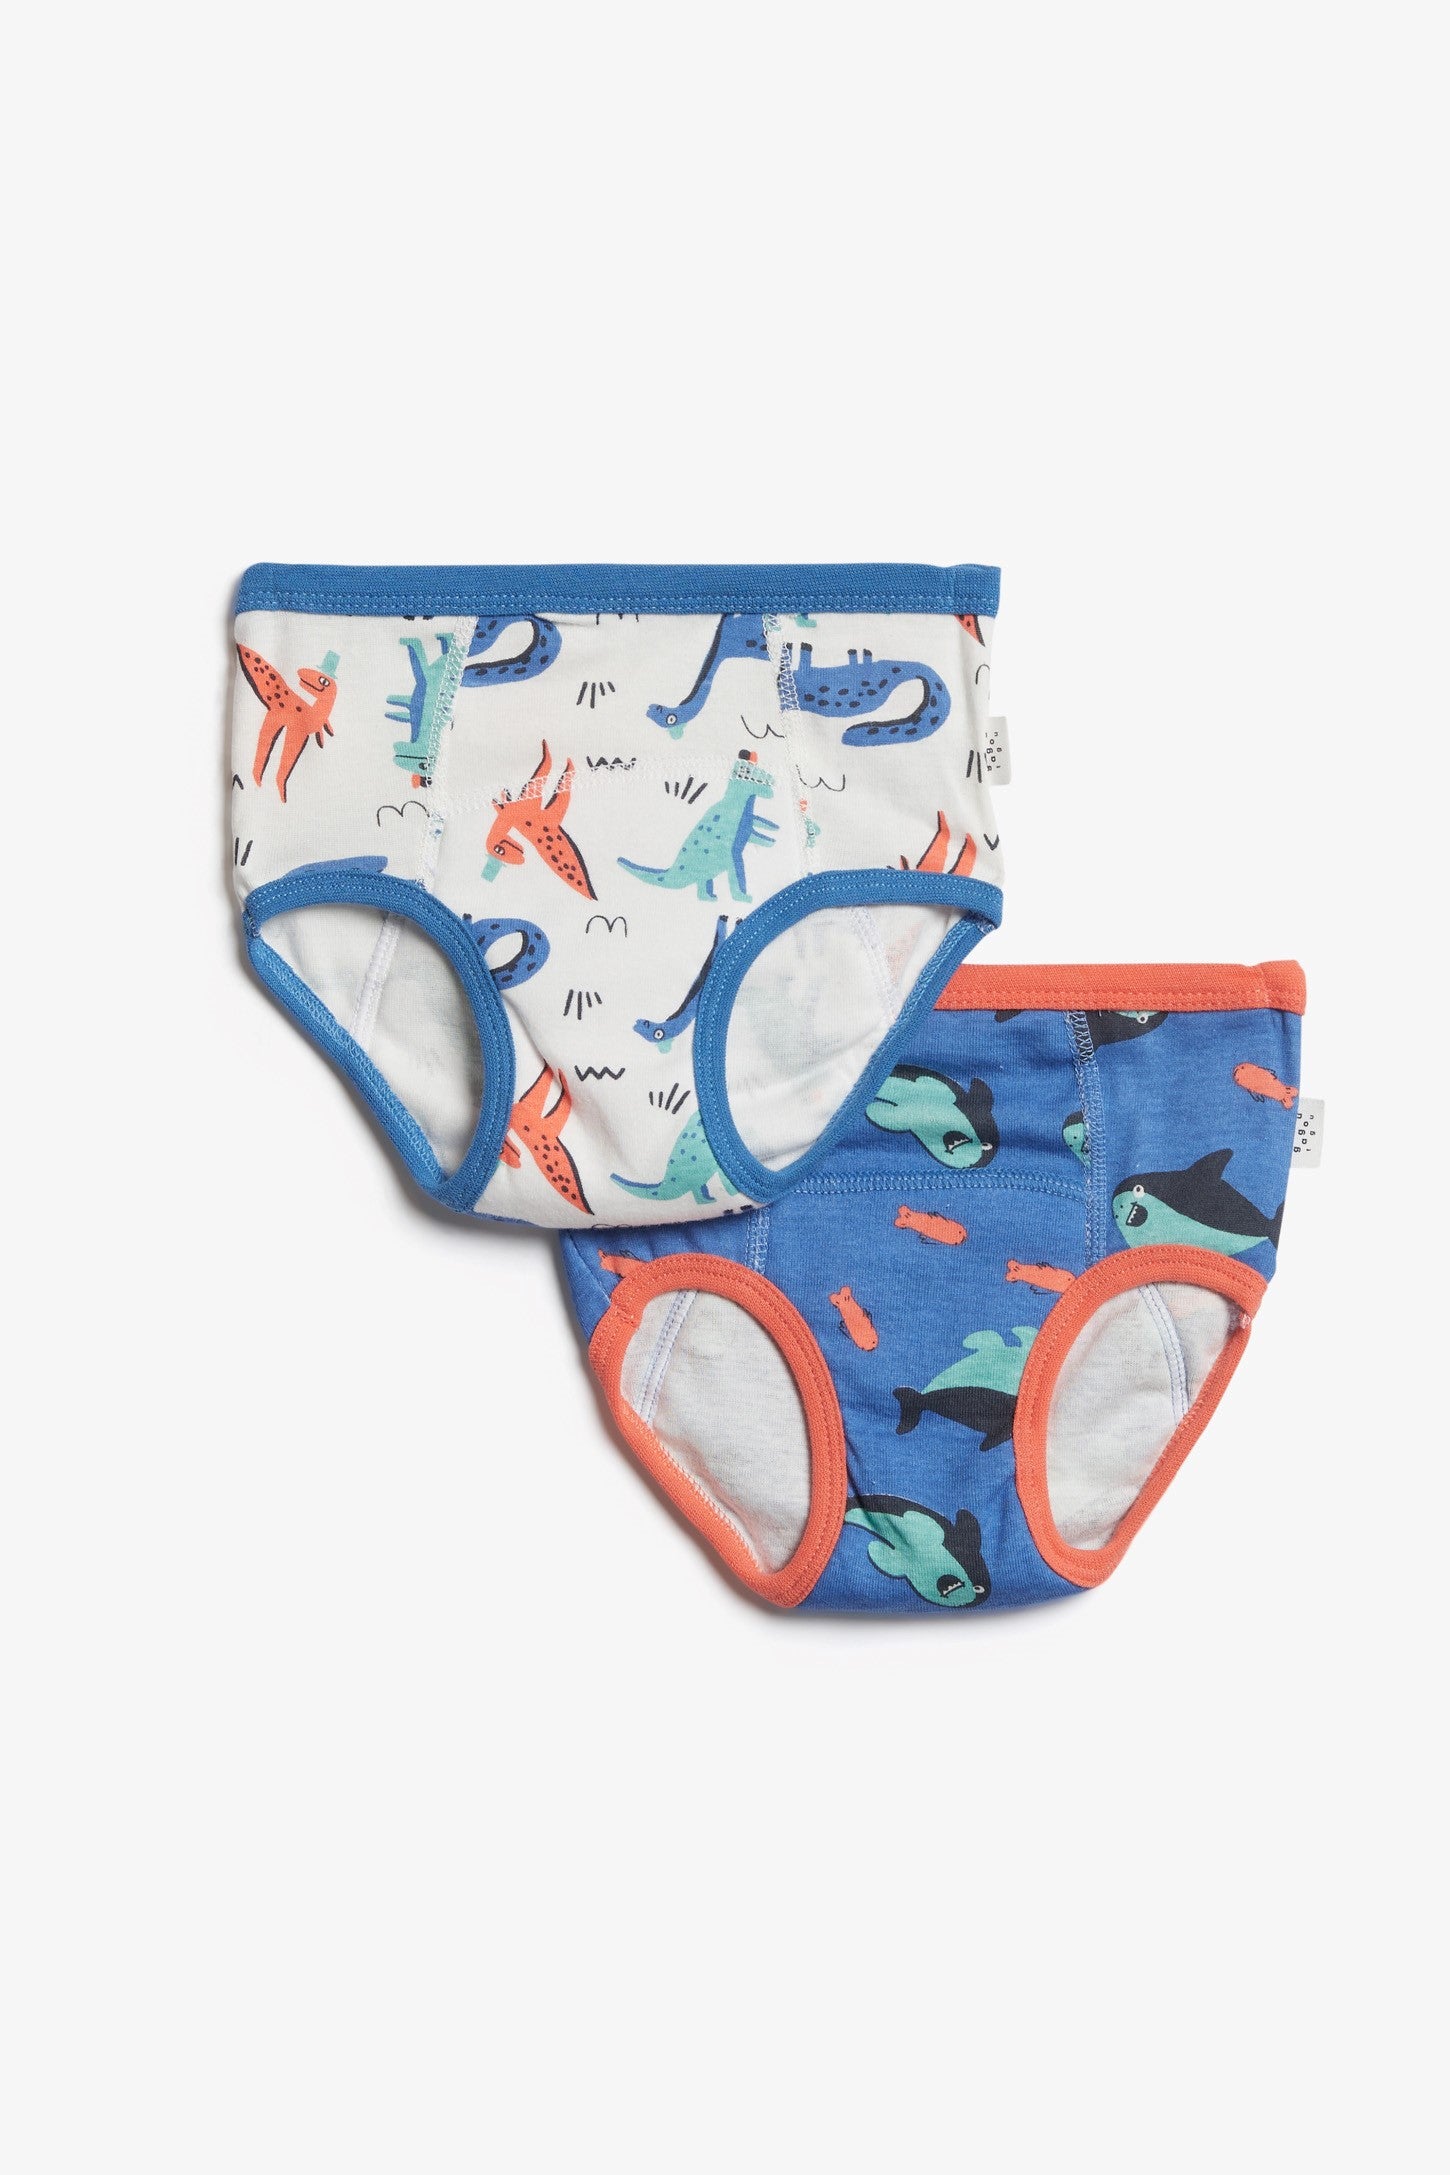 Baby Shark Boys Potty Training Pant Underwear, Shark Blue 3pk, 2